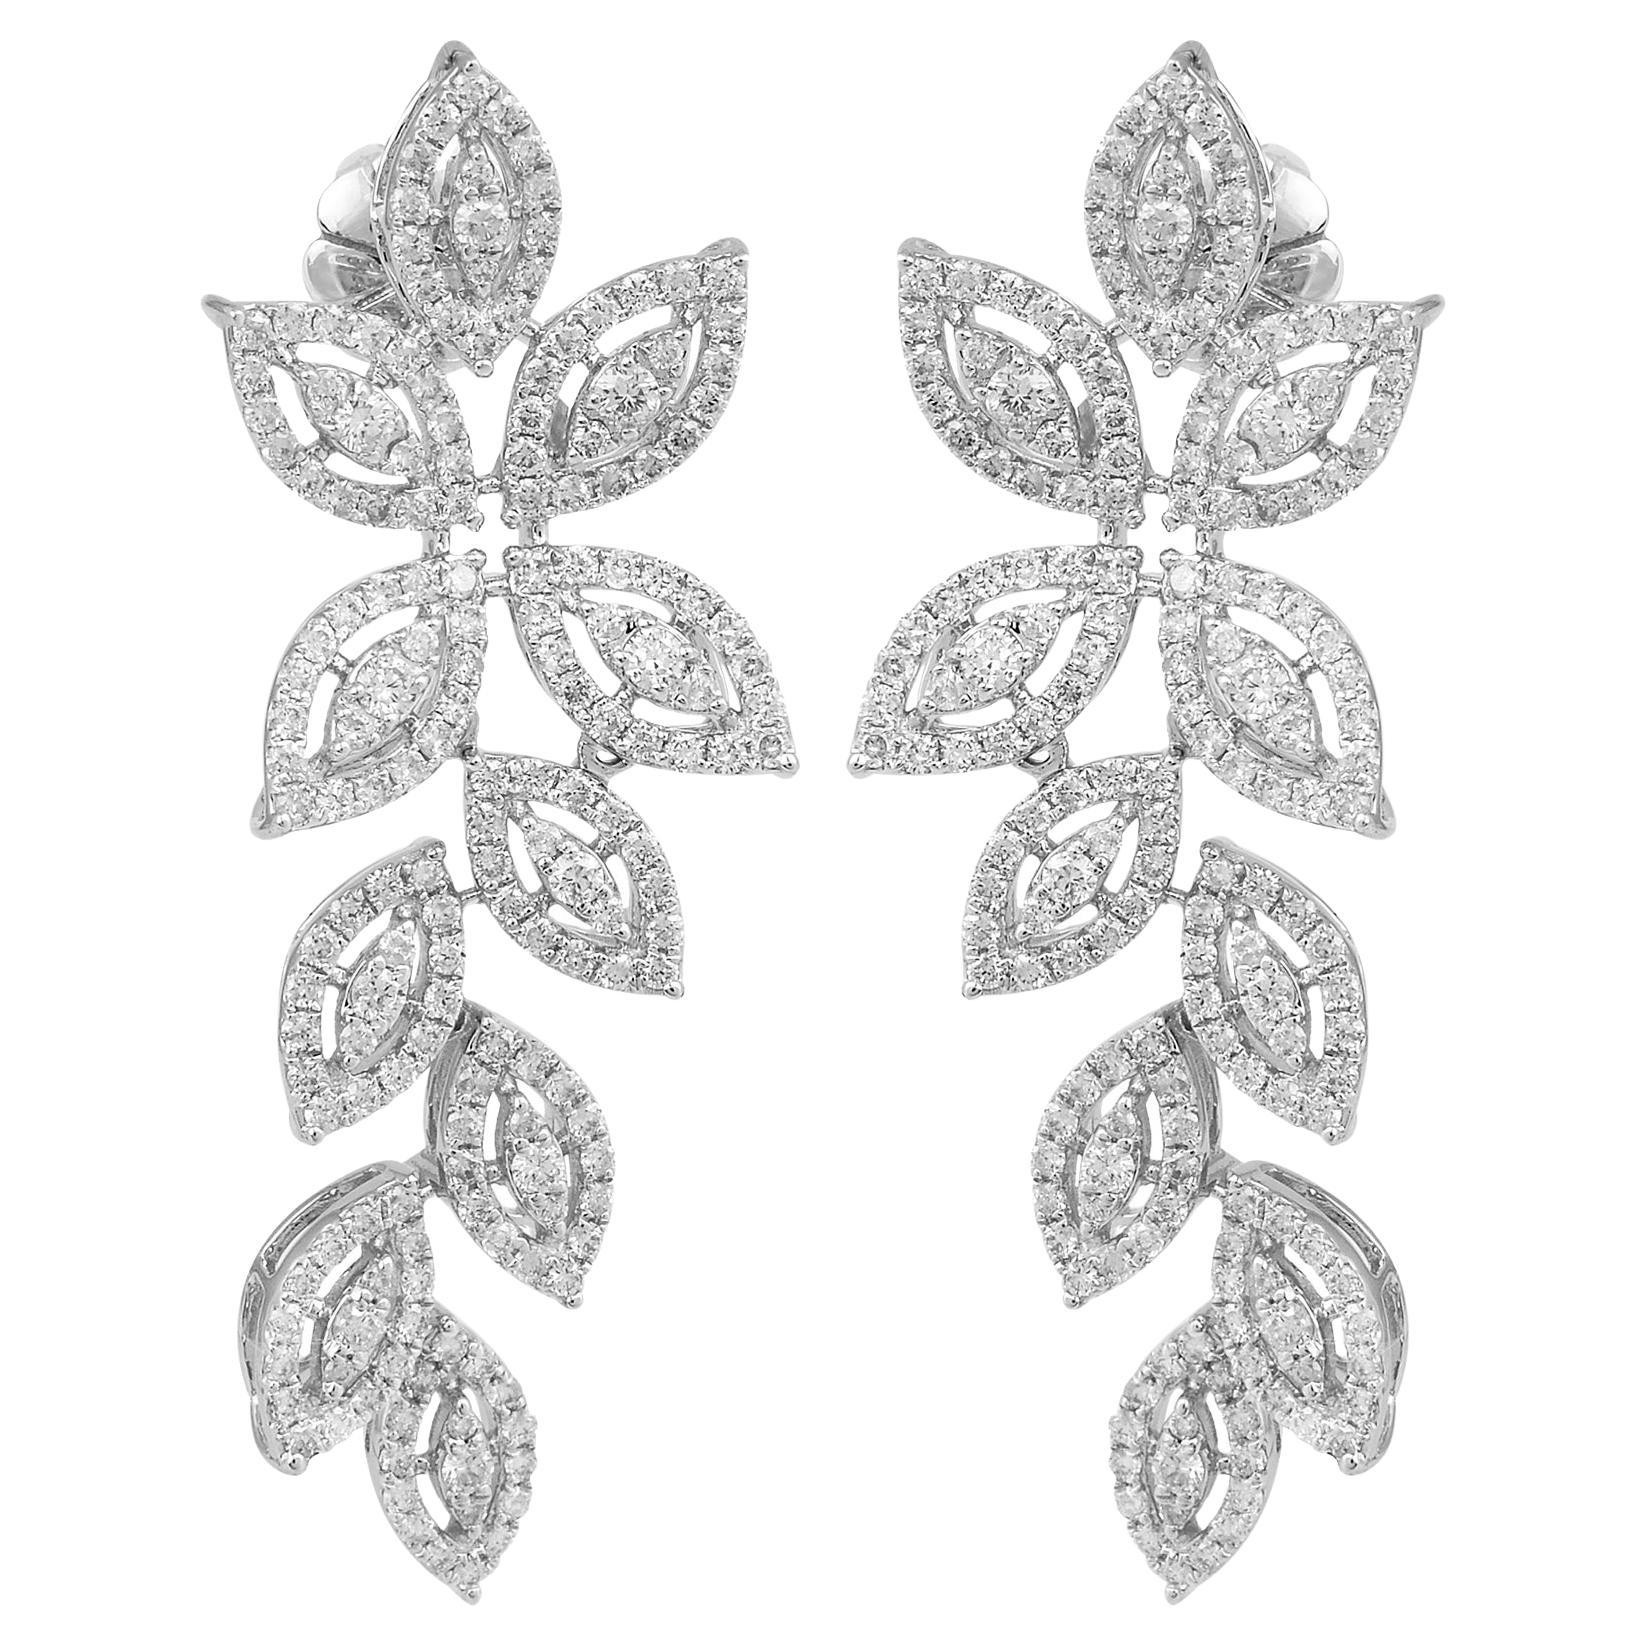 2.75 Carat SI Clarity HI Color Diamond Leaf Design Earrings 18 Karat White Gold